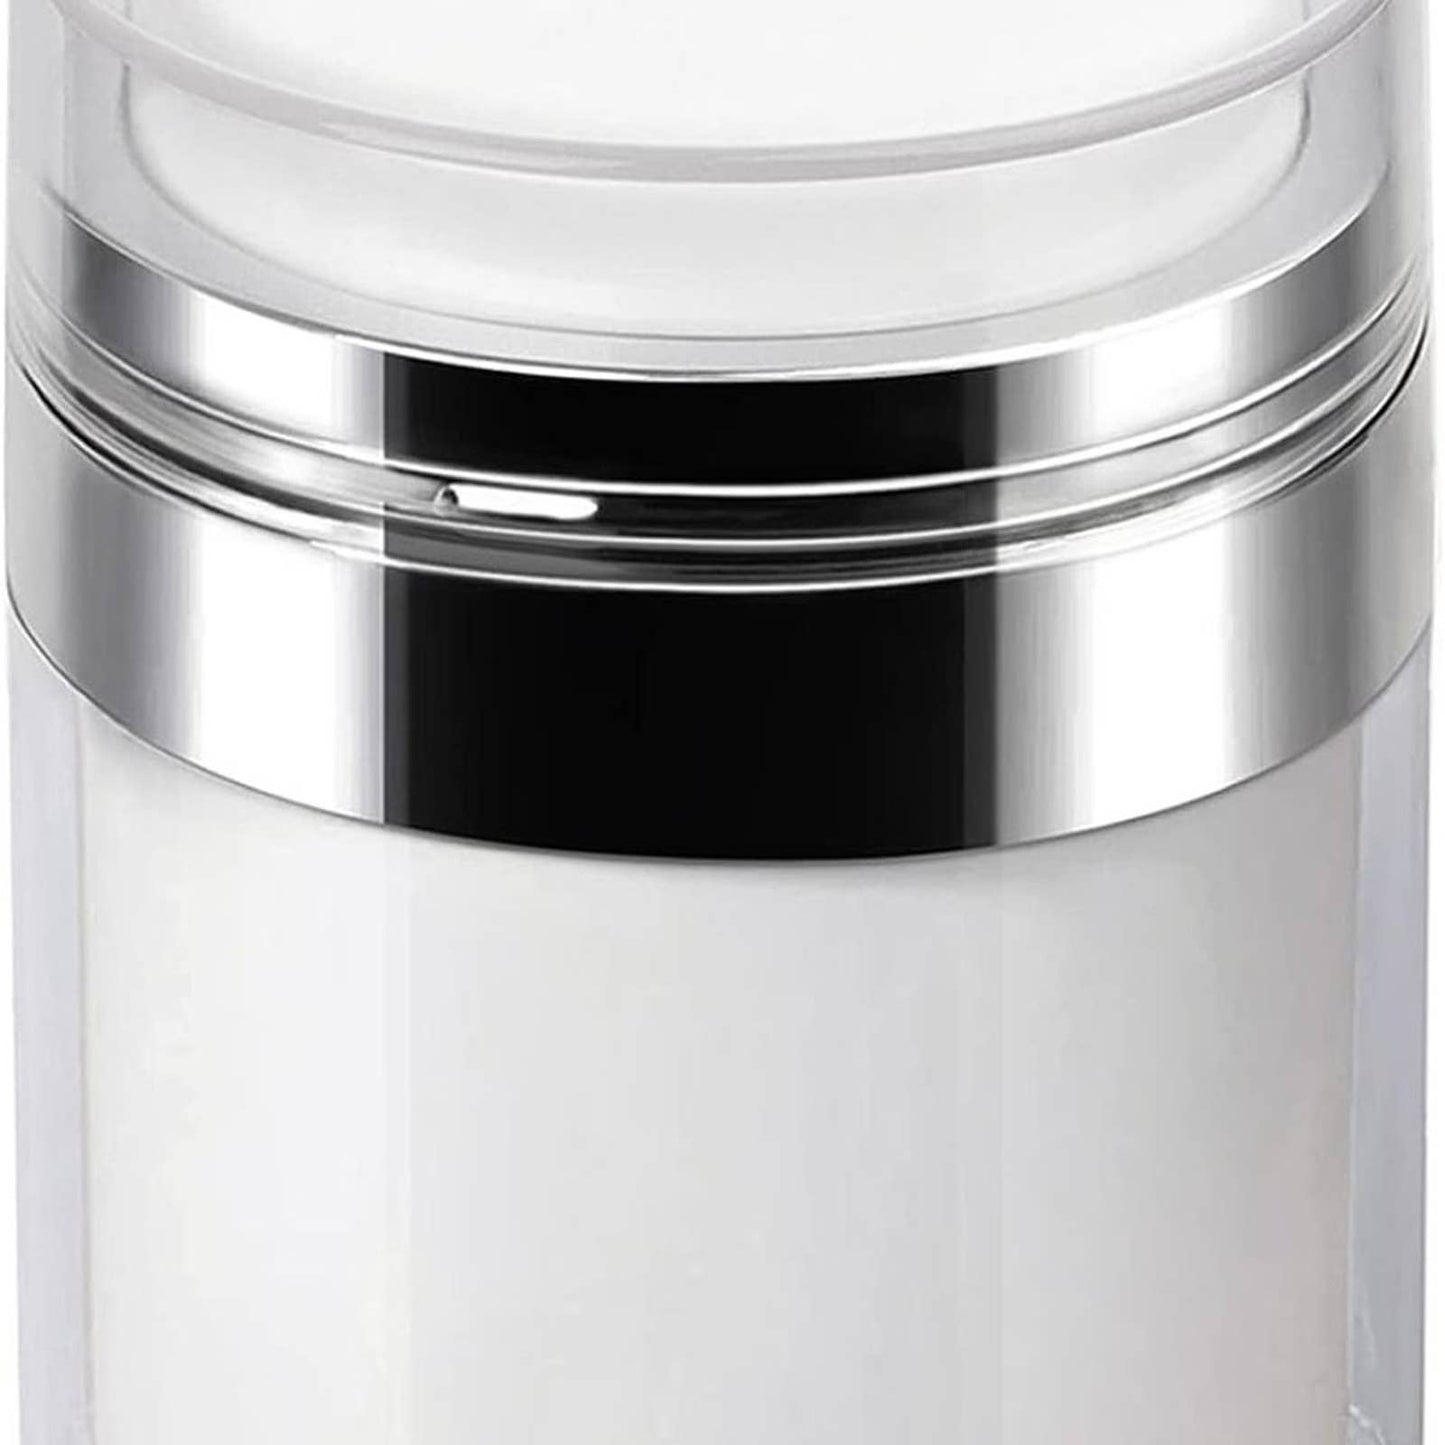 Airless Pump Jar - 0.5 Oz Air Pump Container for Cream, Pump Container